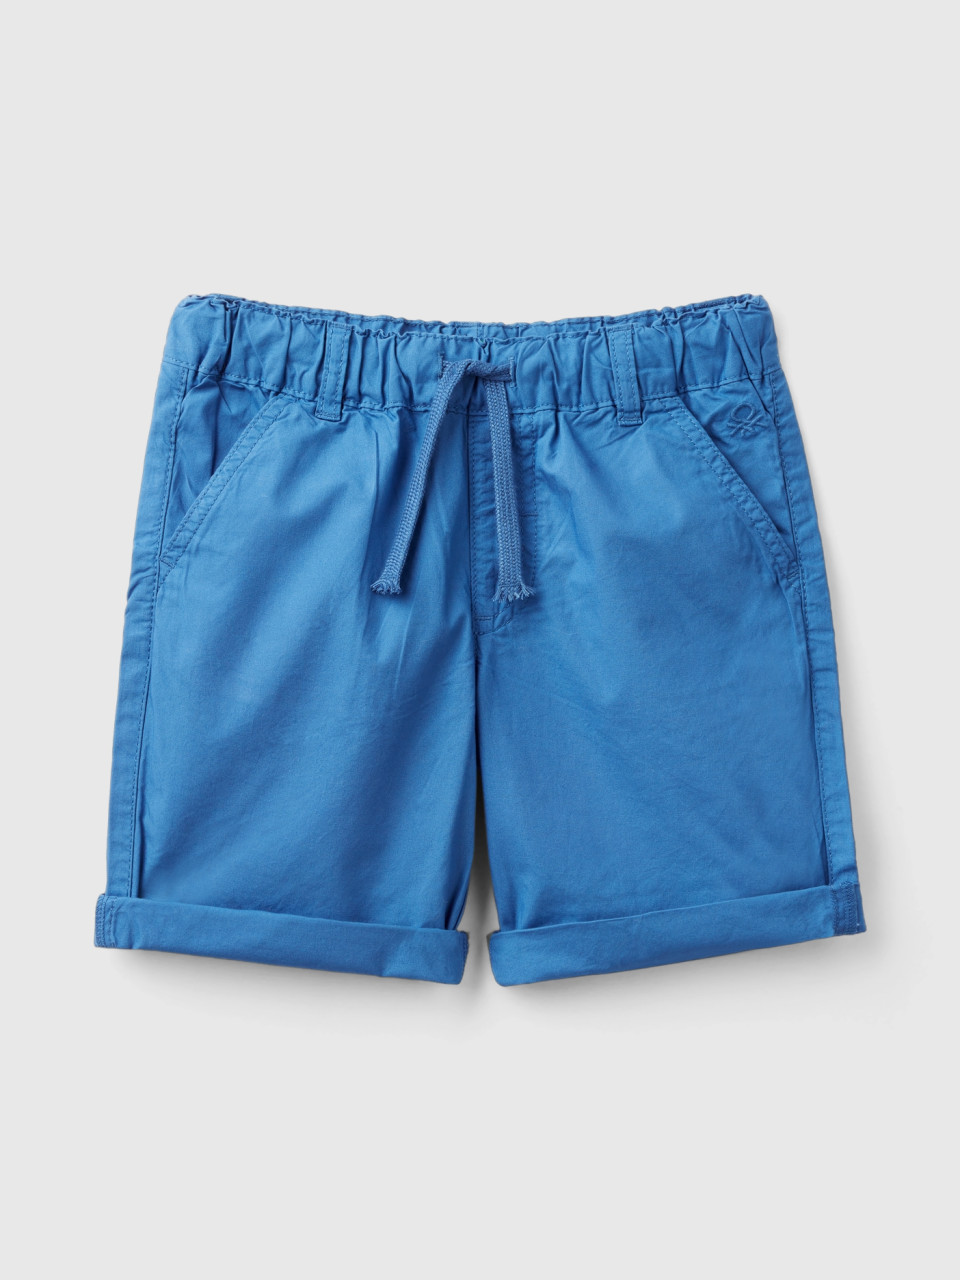 Benetton, 100% Cotton Shorts With Drawstring, Blue, Kids